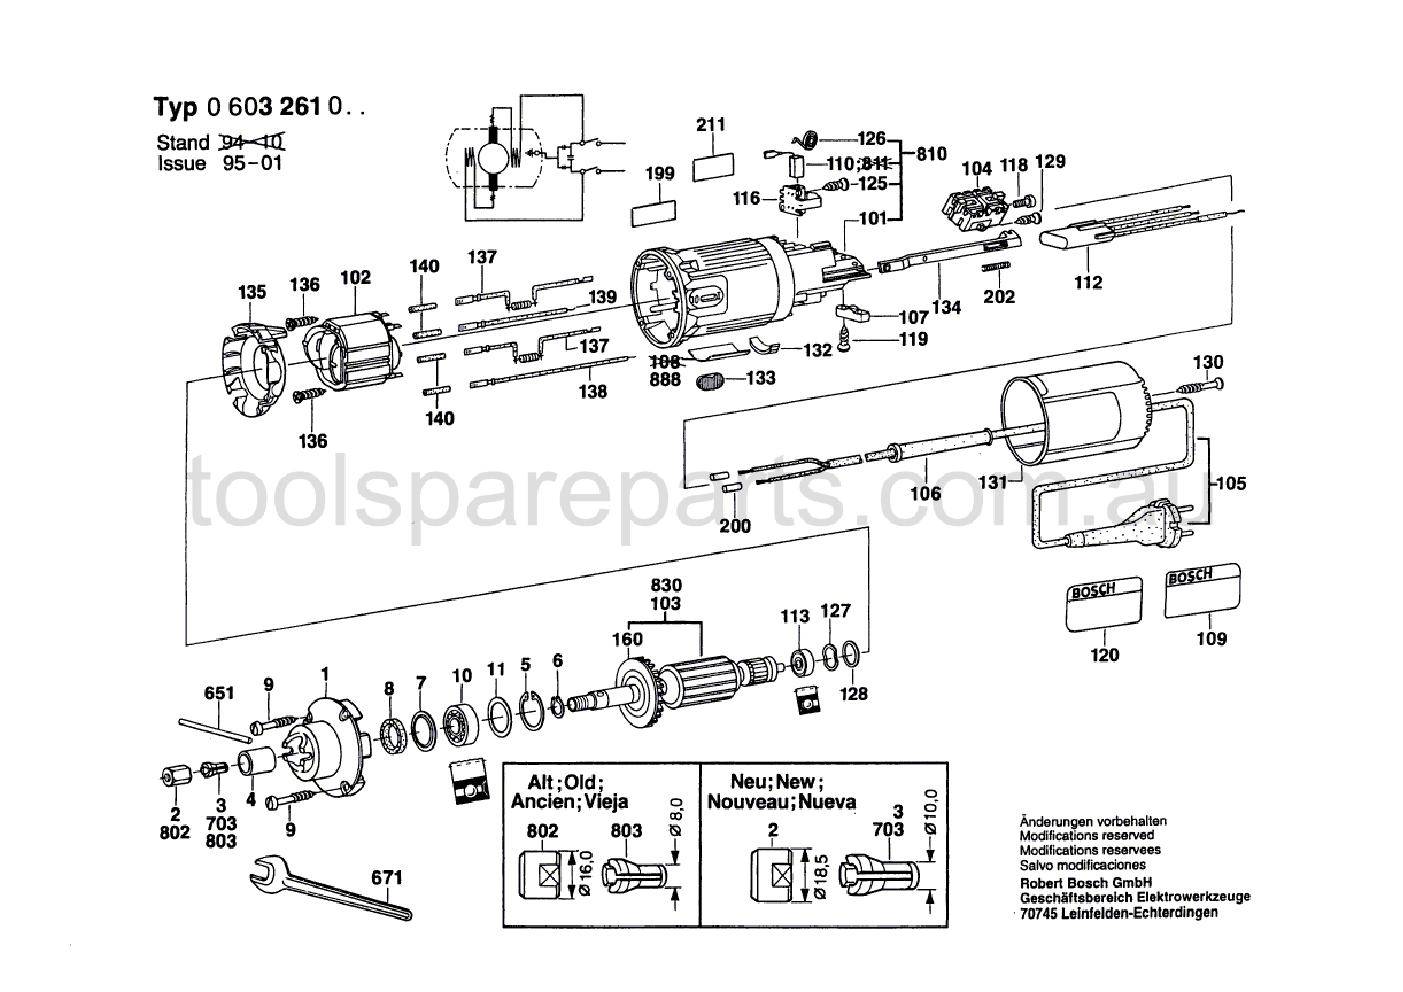 Bosch PAM 500 0603261037  Diagram 1